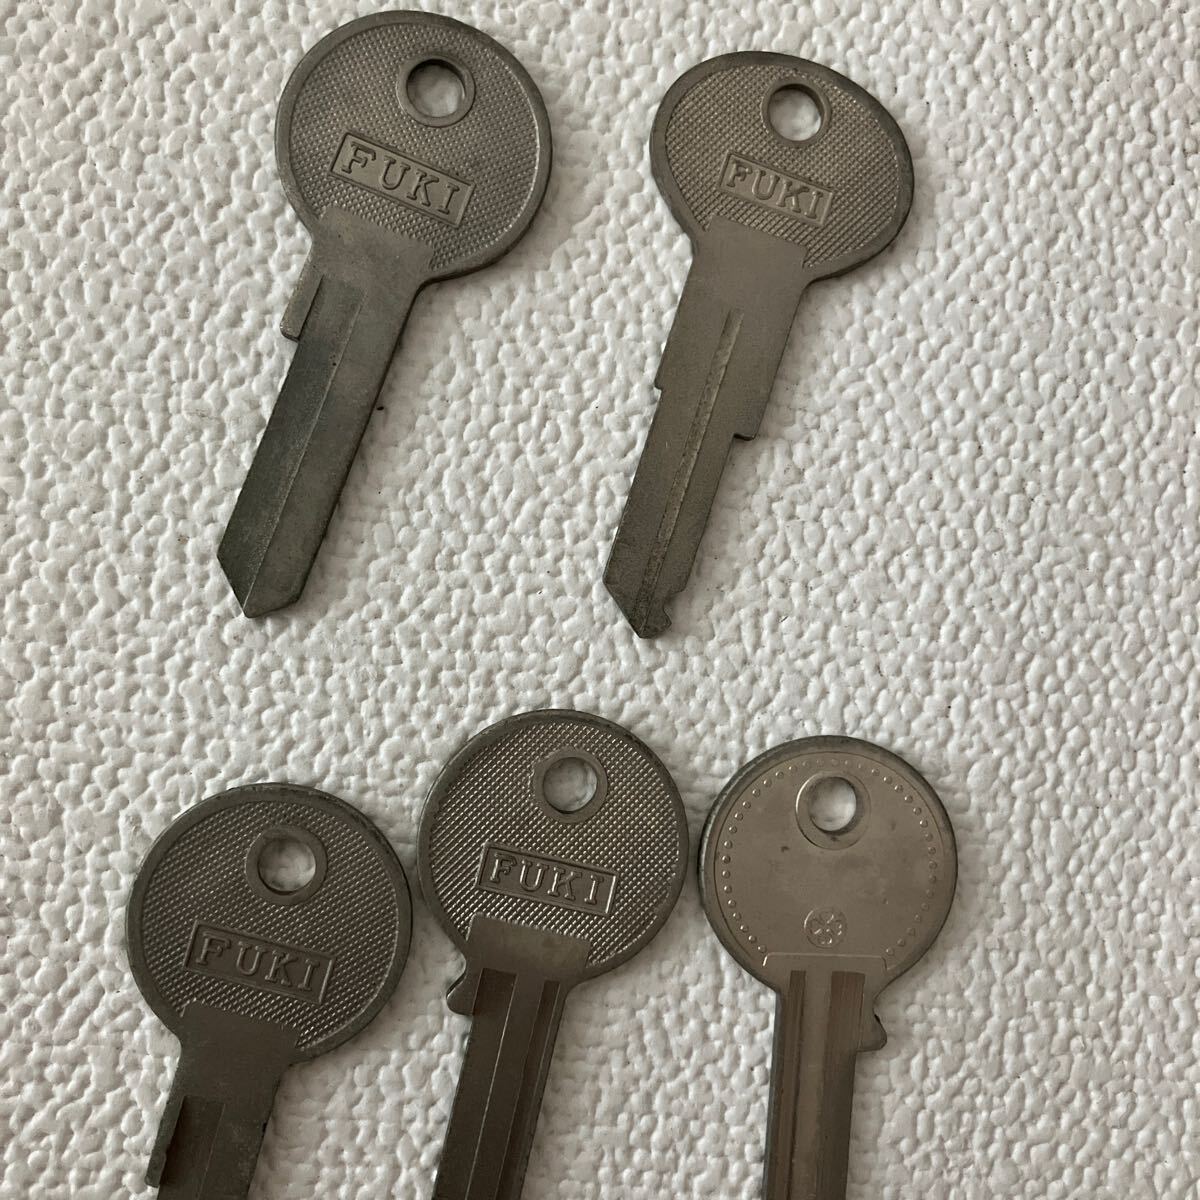 c306-9 60 未使用品 鍵 カギ まとめて 大量セット 合鍵 ブランクキー 加工 材料 カット 持込み コピーキー FUKI H番 M番 クローバー H12